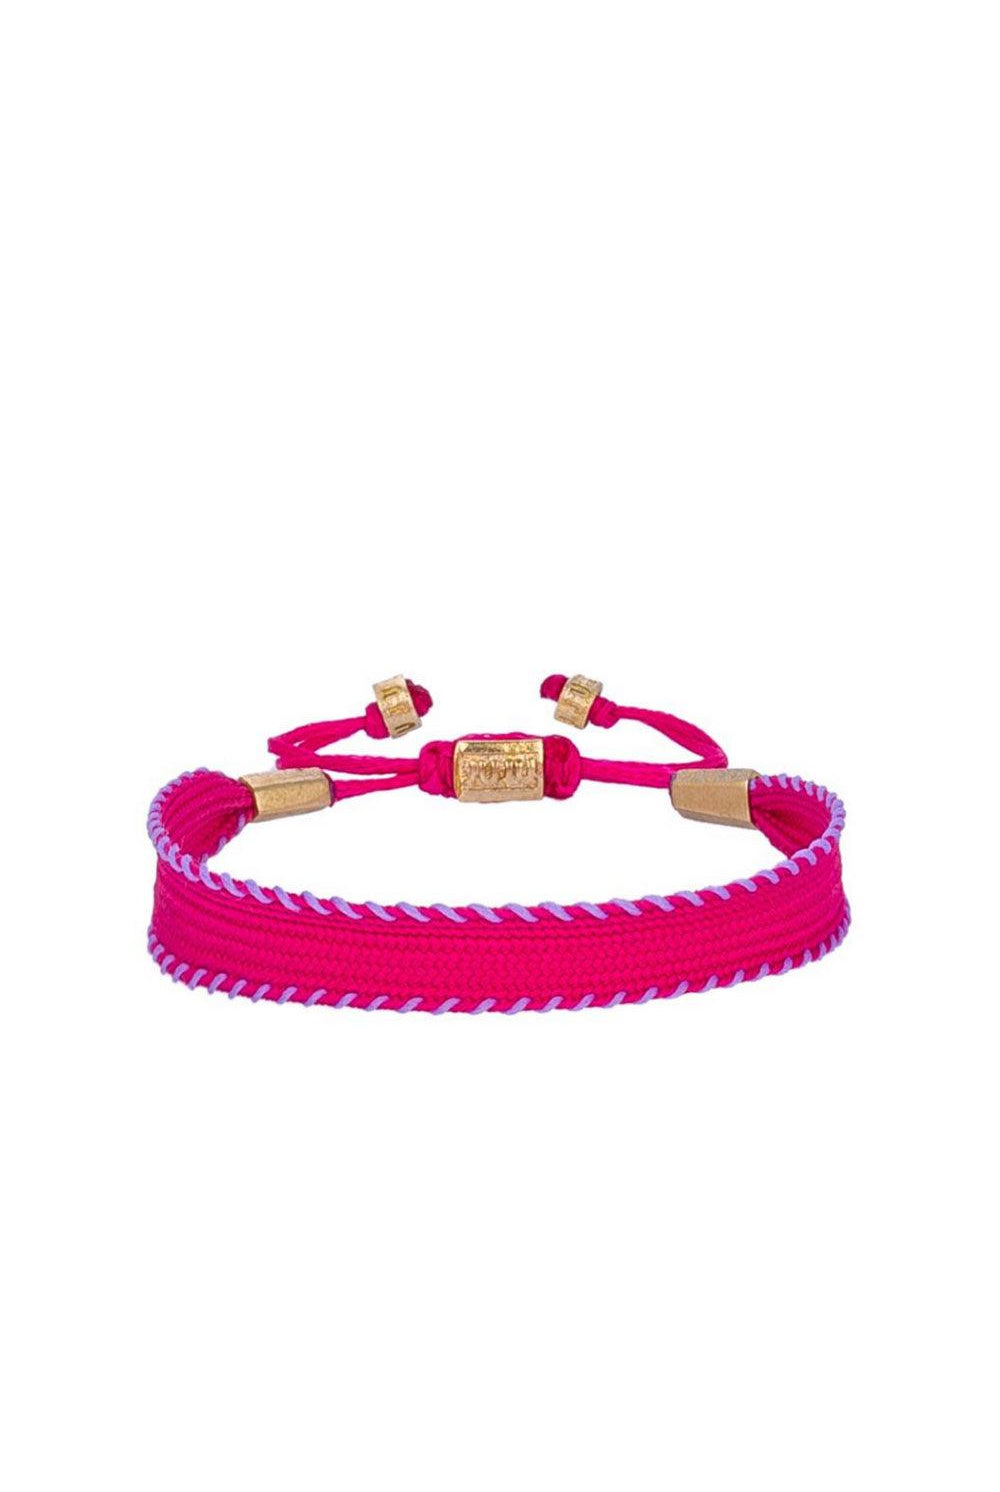 JUJU | Coloured Rope Bracelet CCI-1012 | Milagron